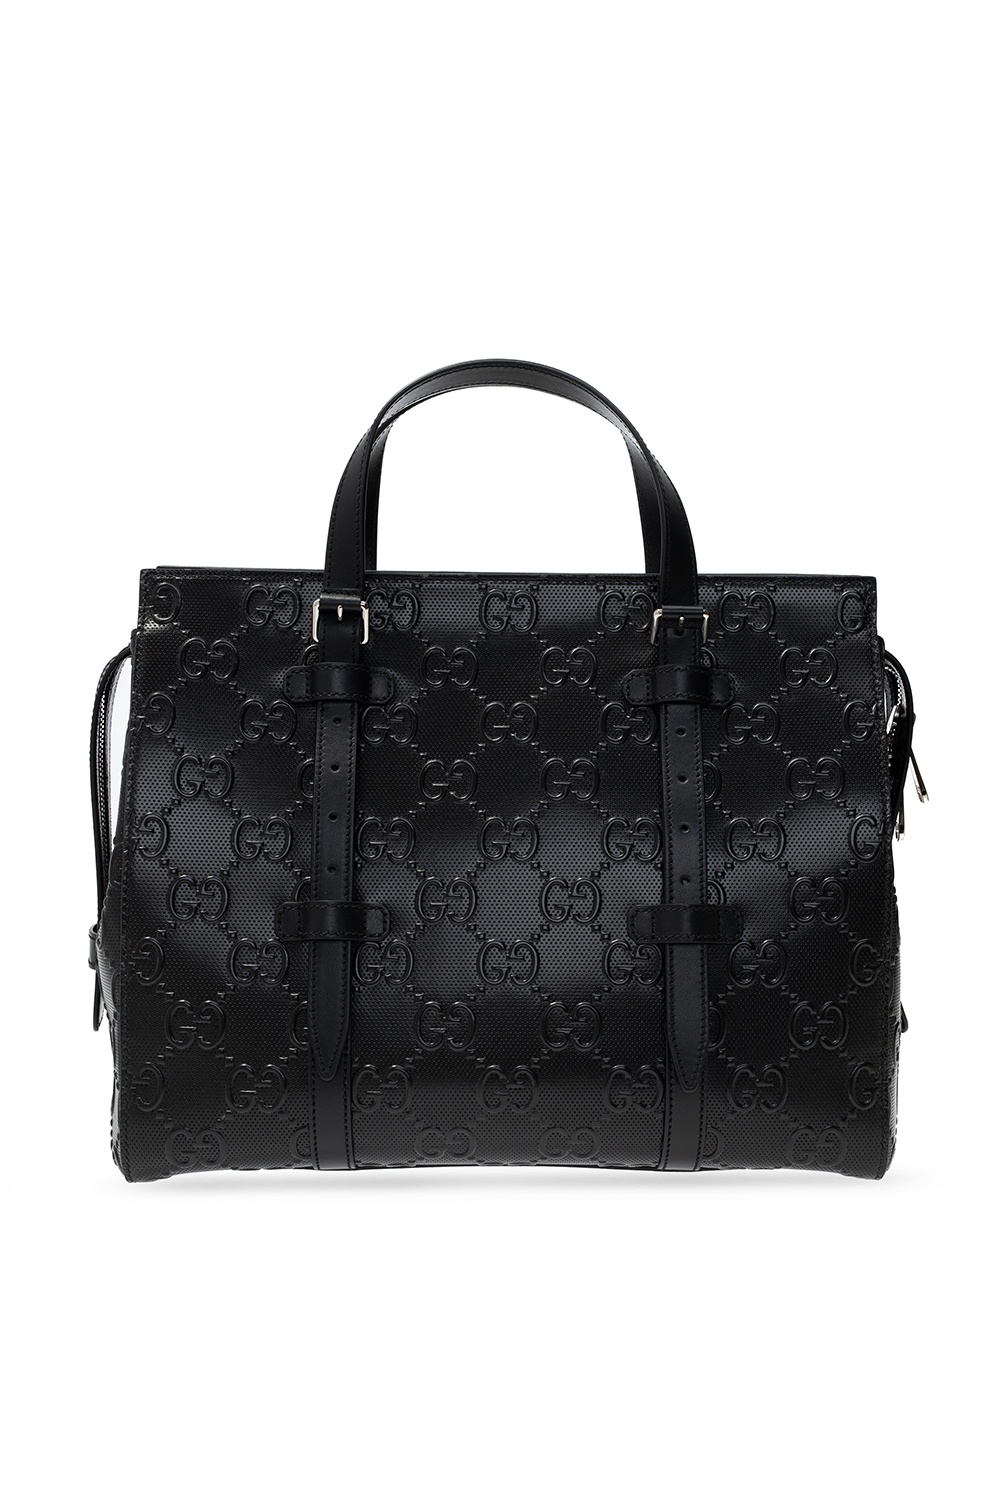 Gucci Duffel bag with logo, Men's Bags